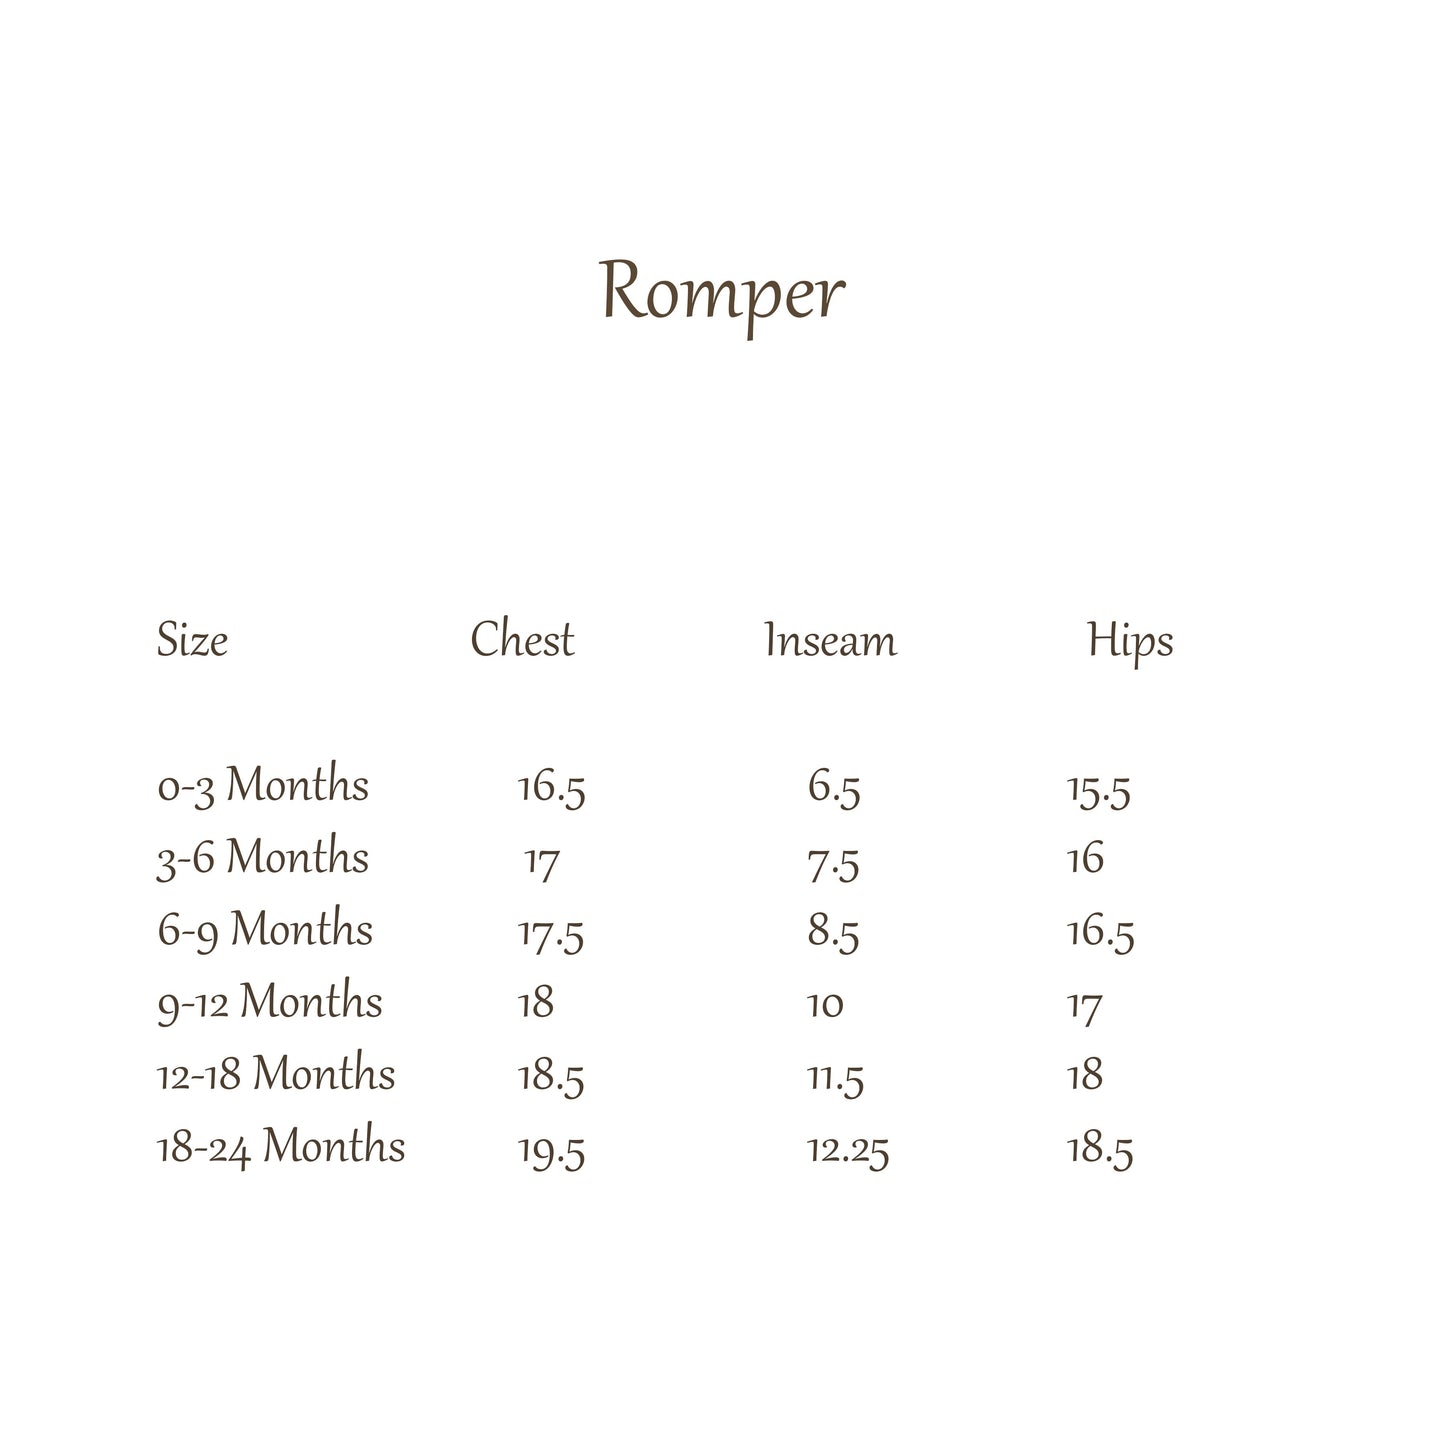 Sailboats Summer Romper, 100% Organic Cotton, Gender Neutral Size 0-3 Months